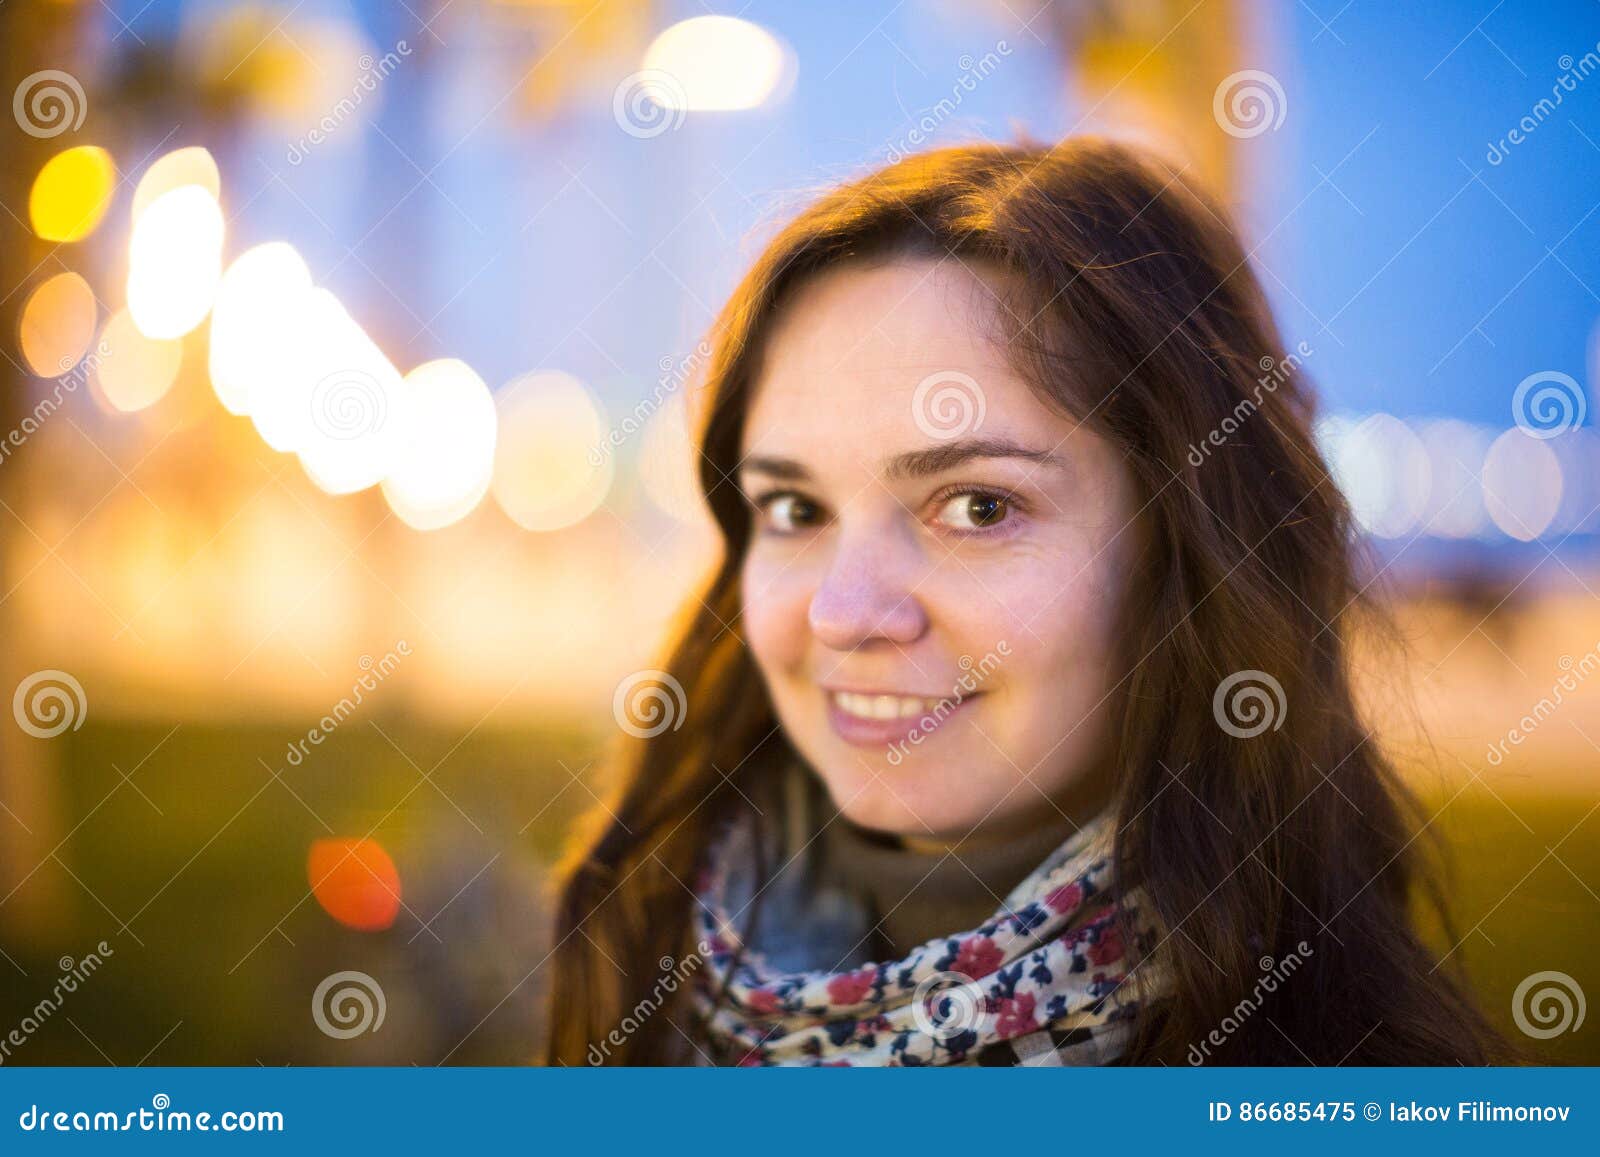 Girl walking on night city stock image. Image of evening - 86685475